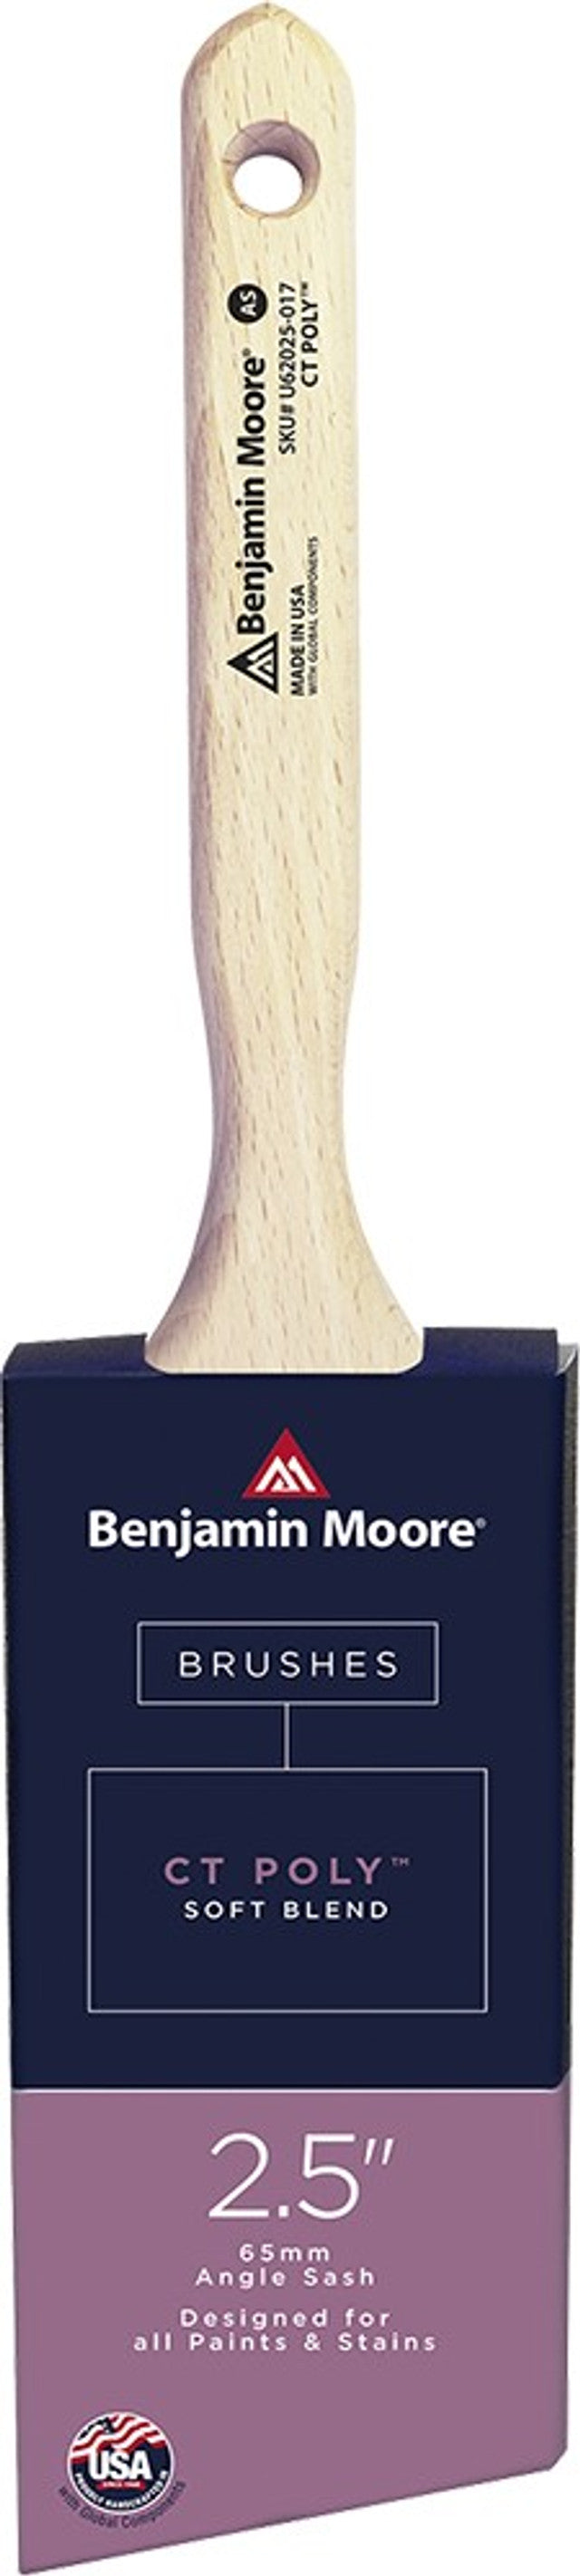 Benjamin Moore 100% Polyester 2 1/2” AS